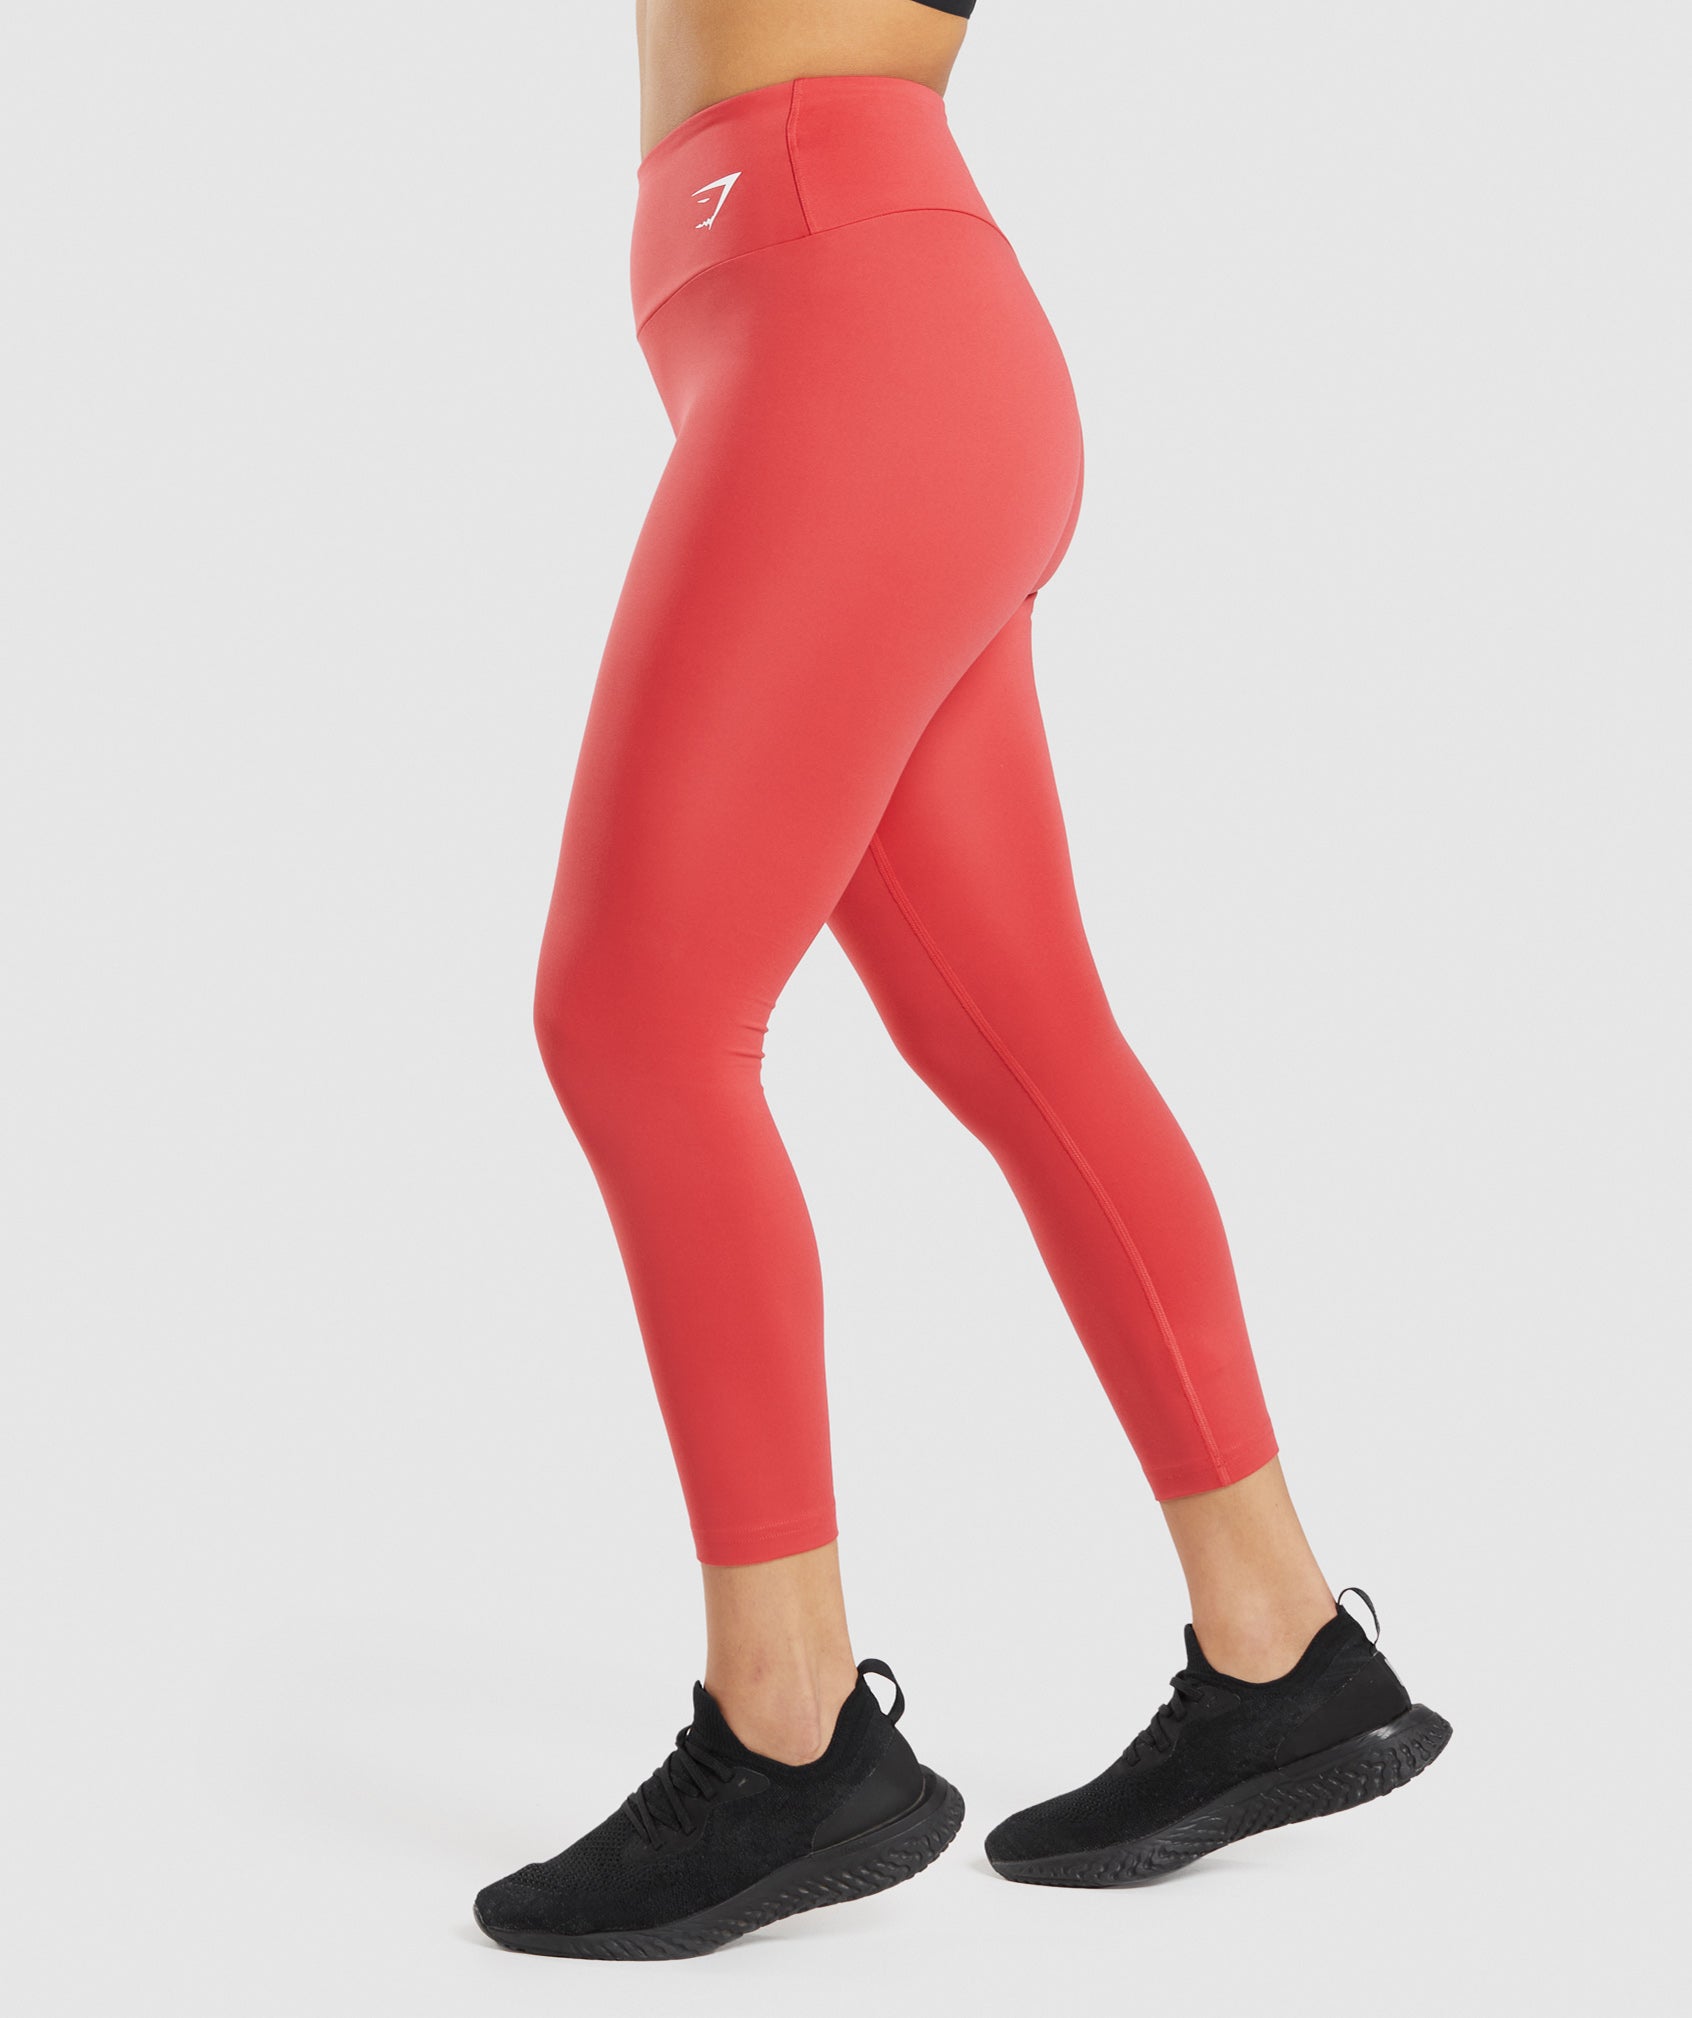 Gymshark Red Energy Seamless Leggings - Women's Size Small :  r/gym_apparel_for_women